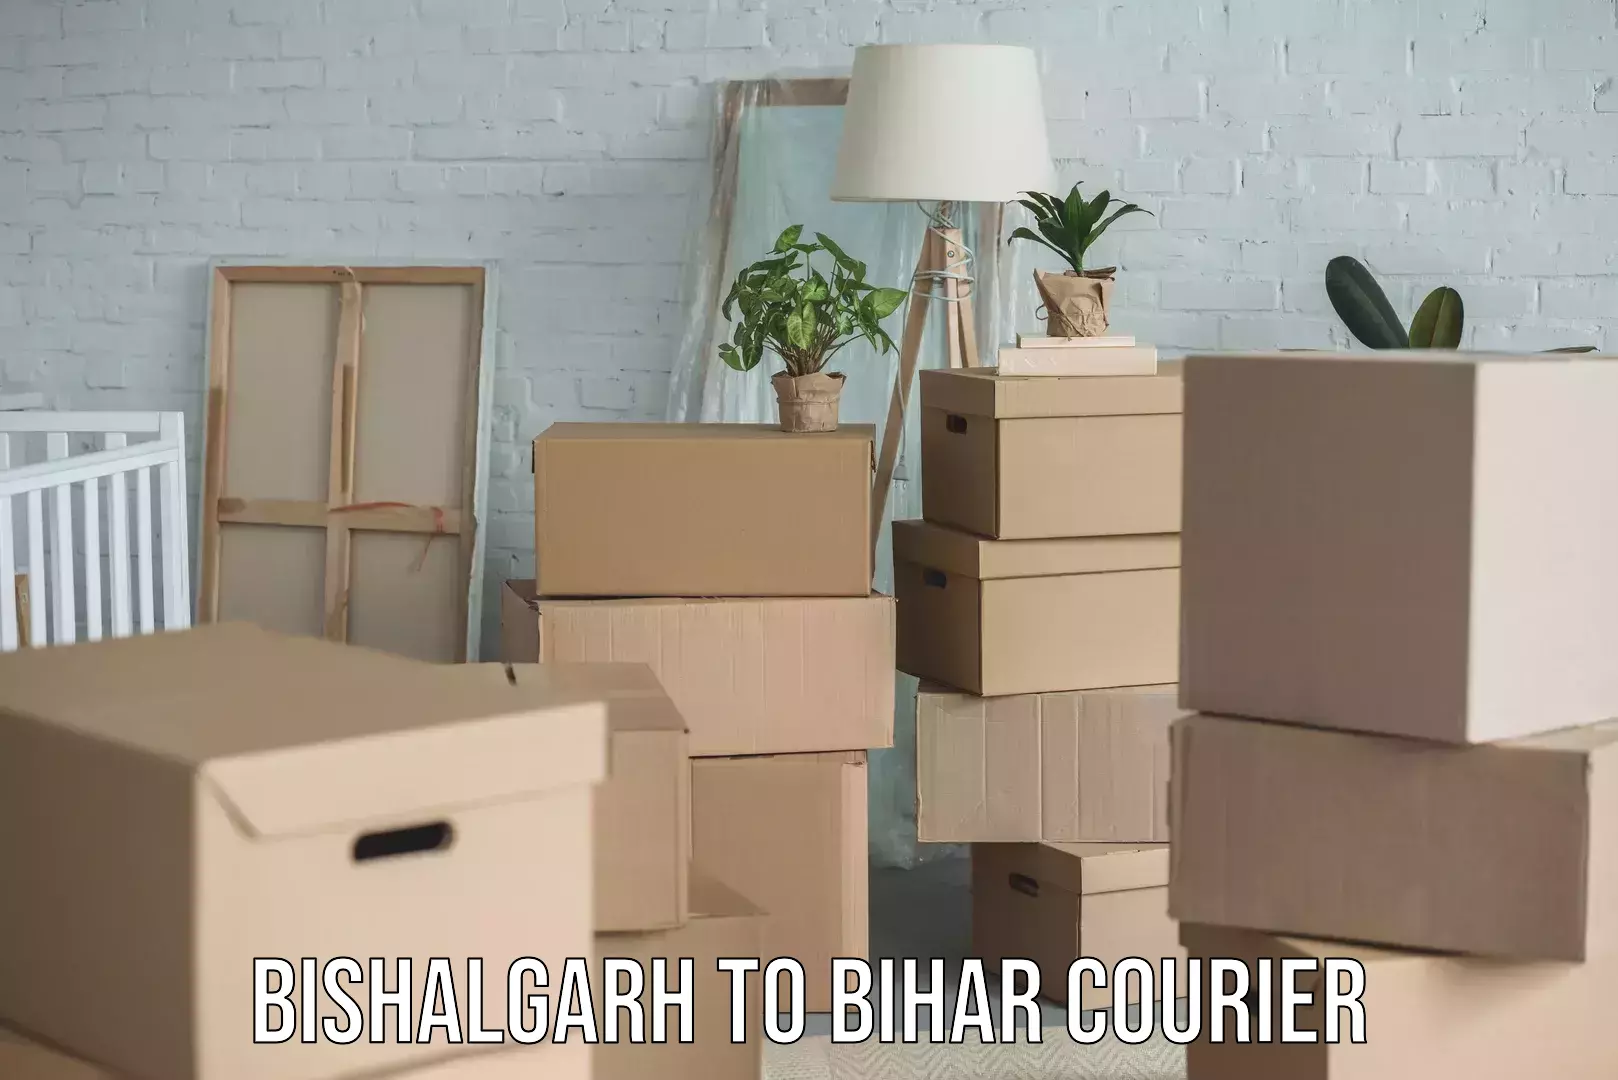 Delivery service partnership Bishalgarh to Bihar